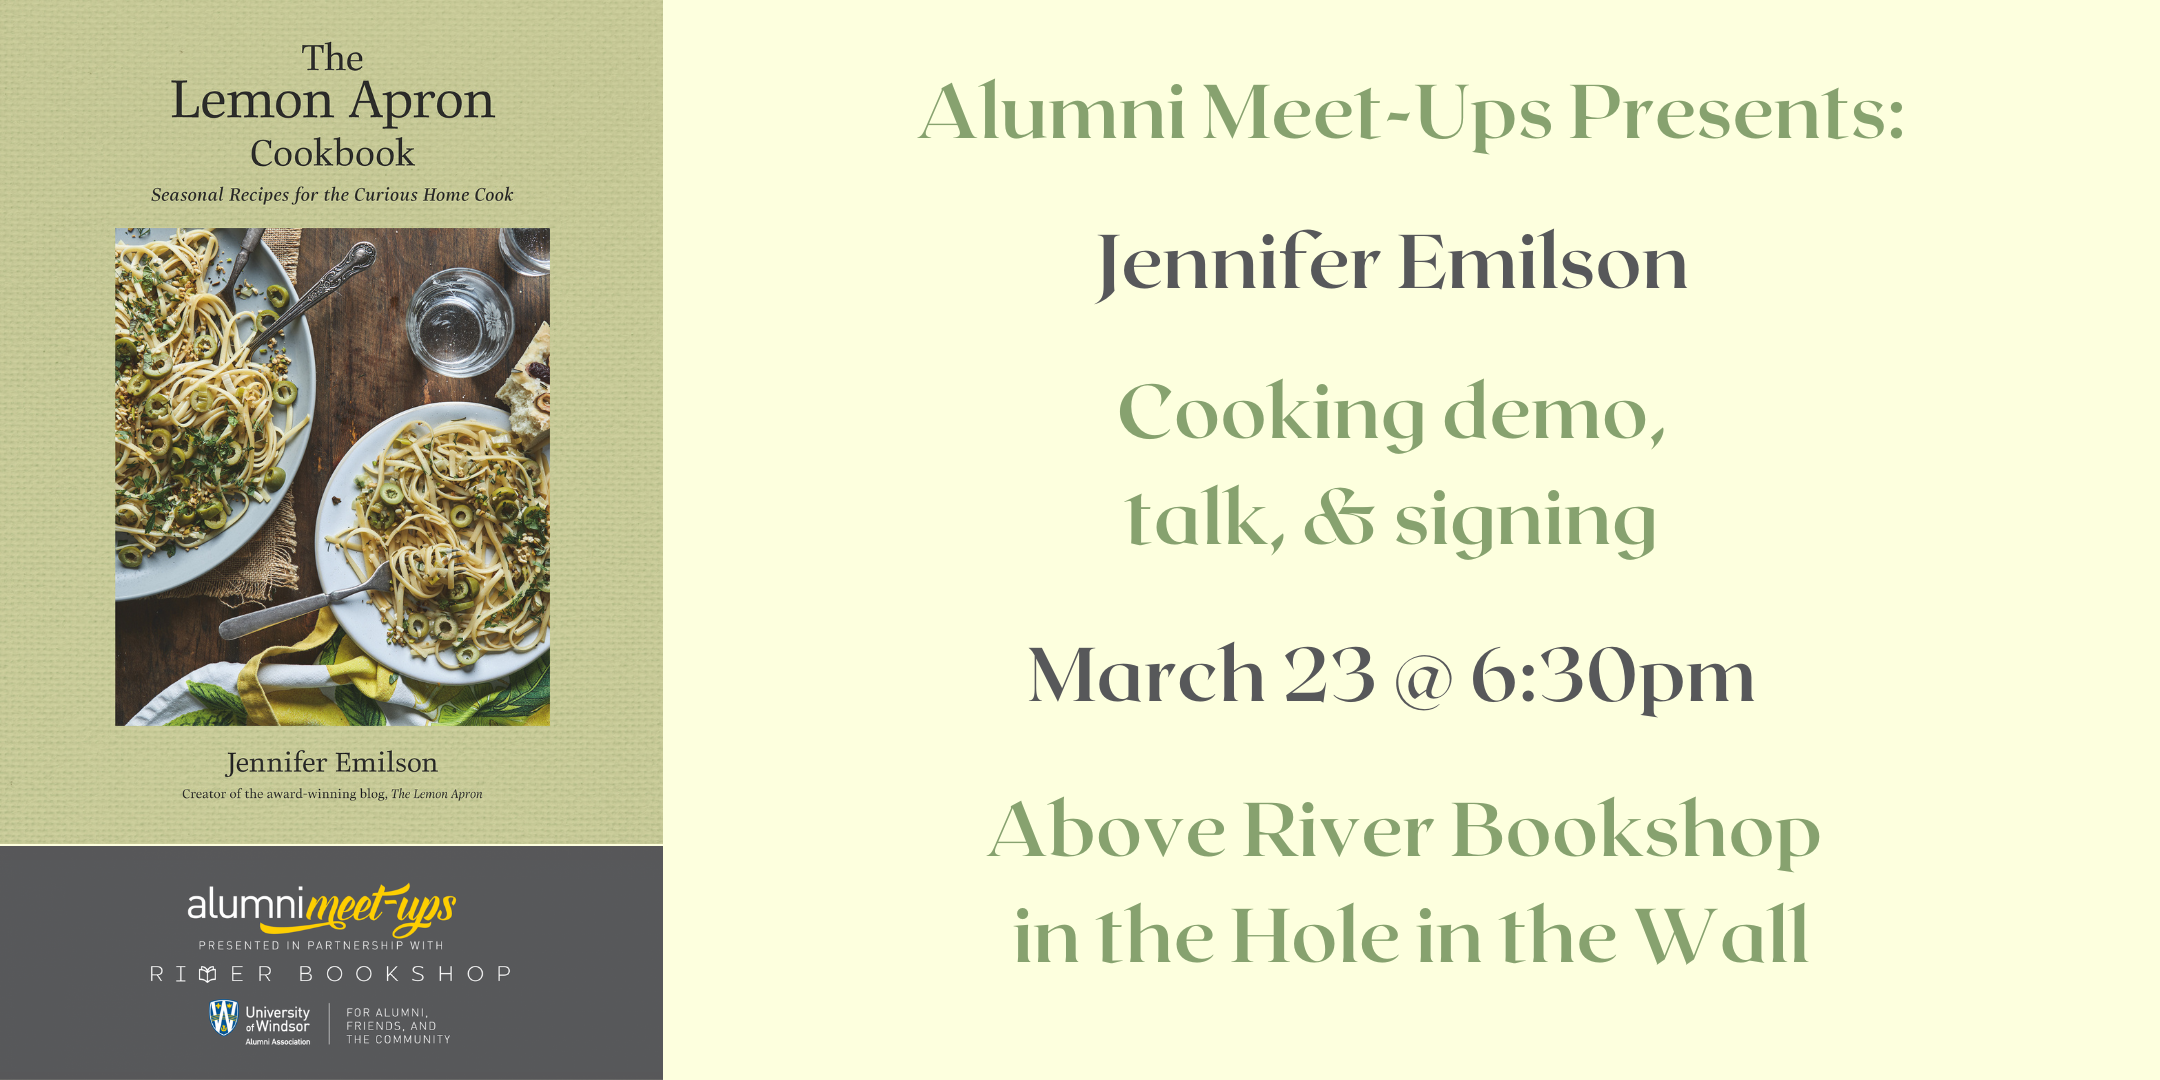 Alumni Meet-Ups: The Lemon Apron Cookbook